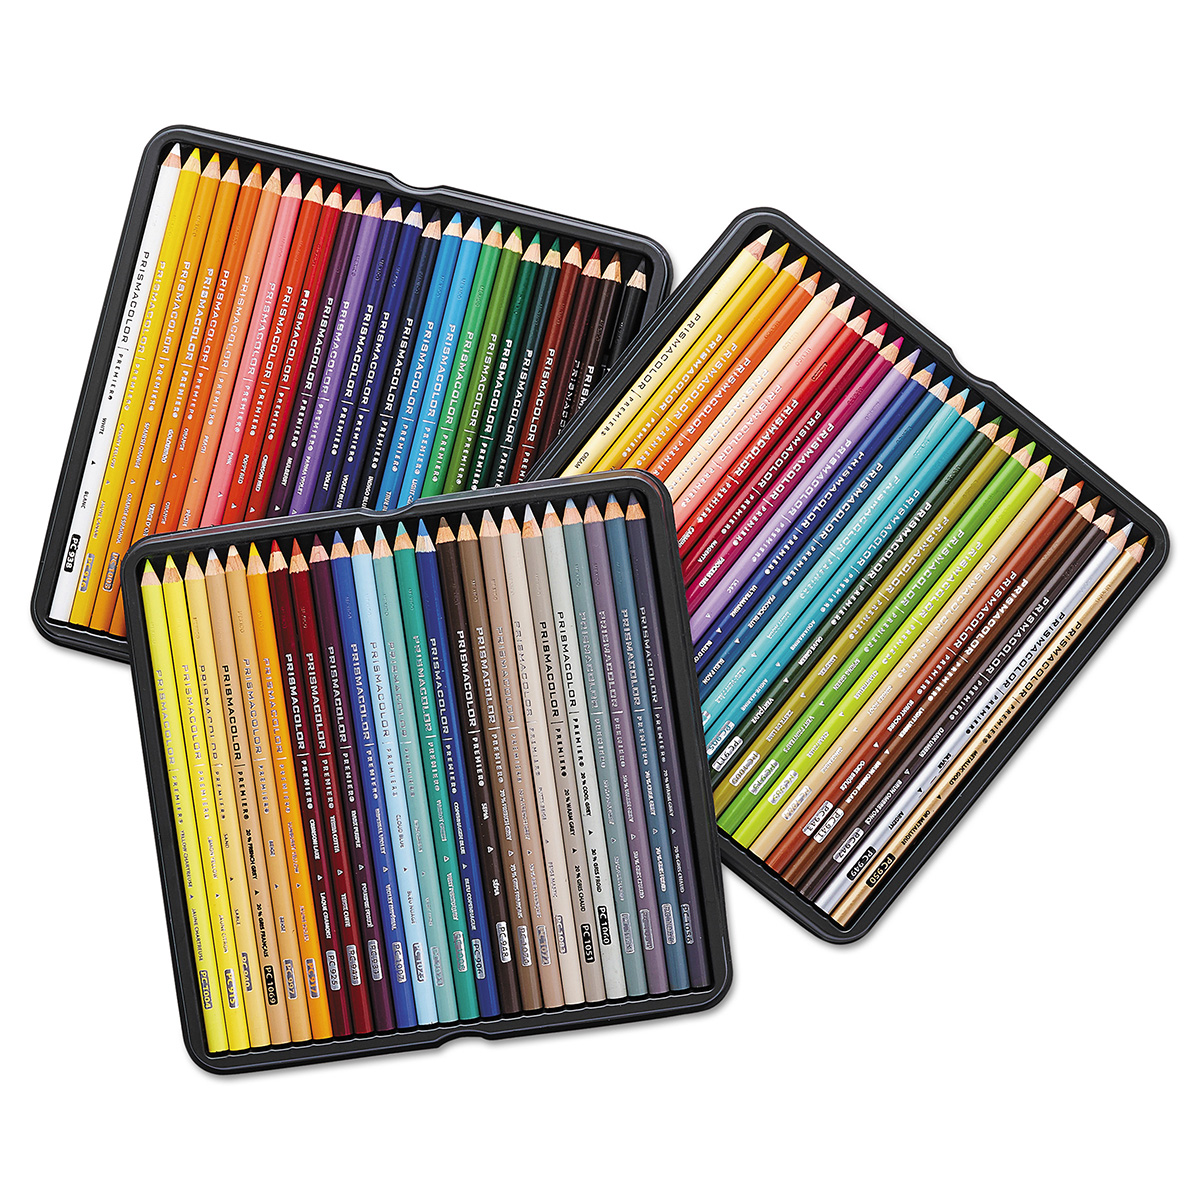 https://theinkstone.com/wp-content/uploads/2020/09/Prismacolor-Colored-Pencil-Set-72-4.jpg